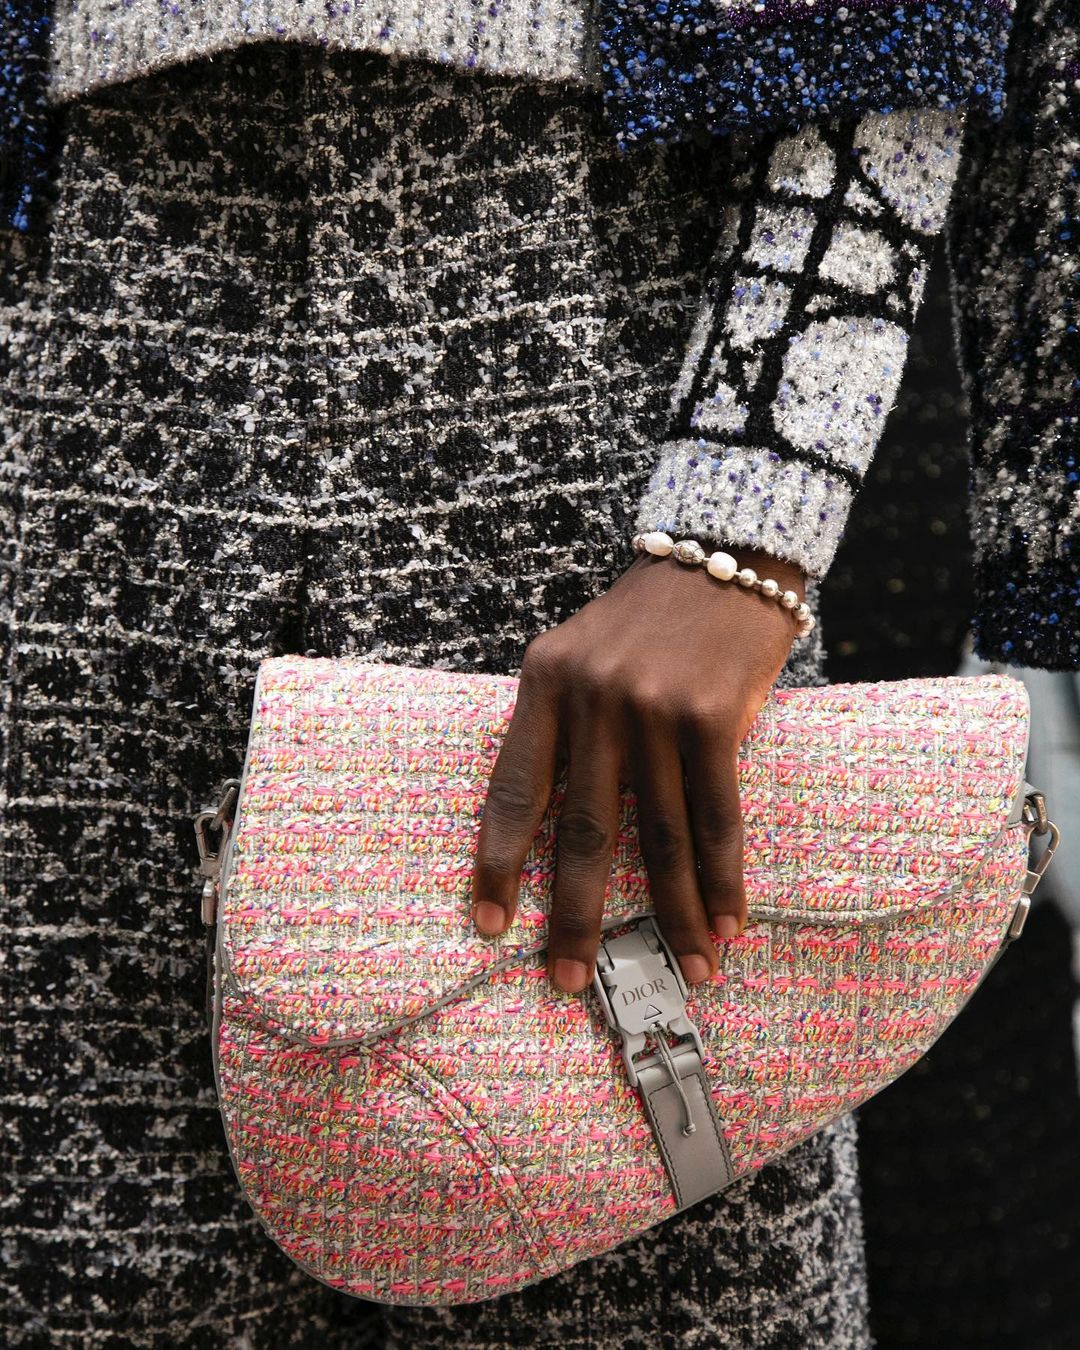 Kim Jones Explores Maison Dior – The Fashionisto